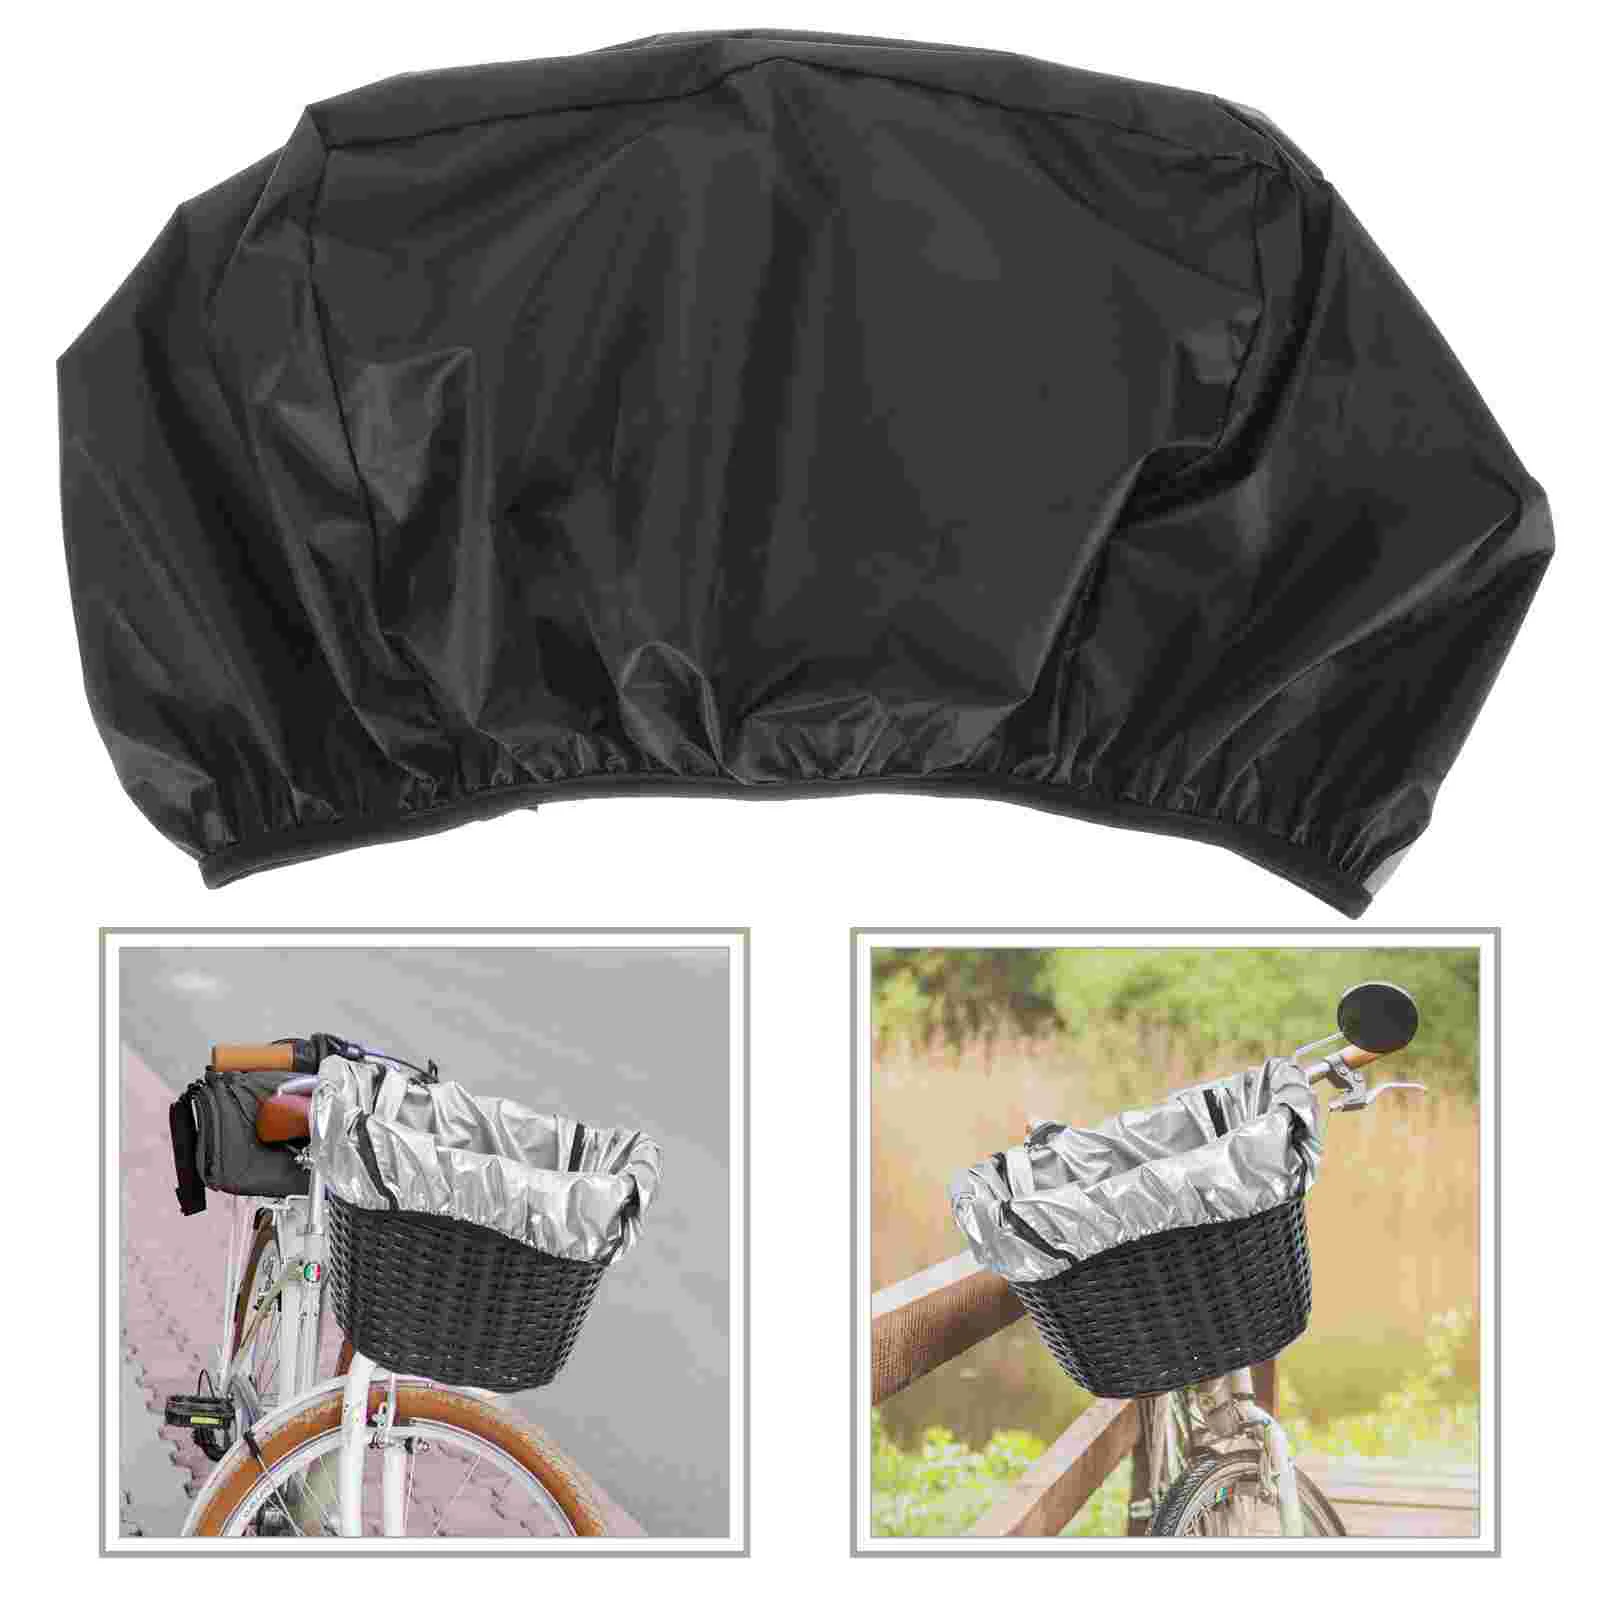 

Basket Rain Cover Wear-resistant Cycling Liner Rainproof Sleeve Luggage Protector Foldable Hamper